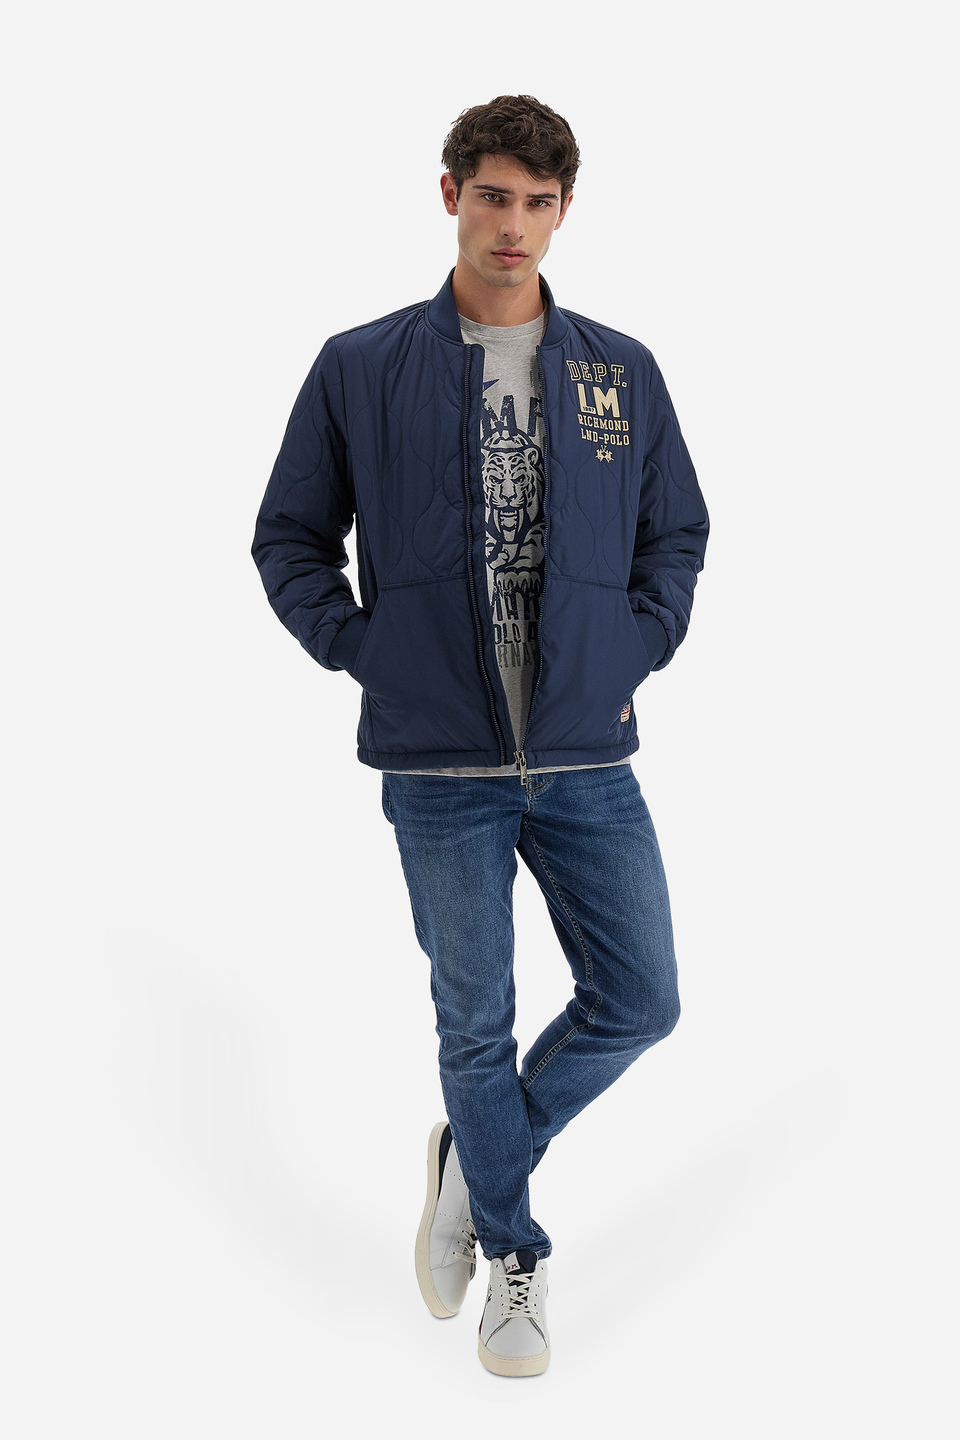 Polo Academy men's solid color high neck full zip jacket with hidden pockets - Vanni | La Martina - Official Online Shop